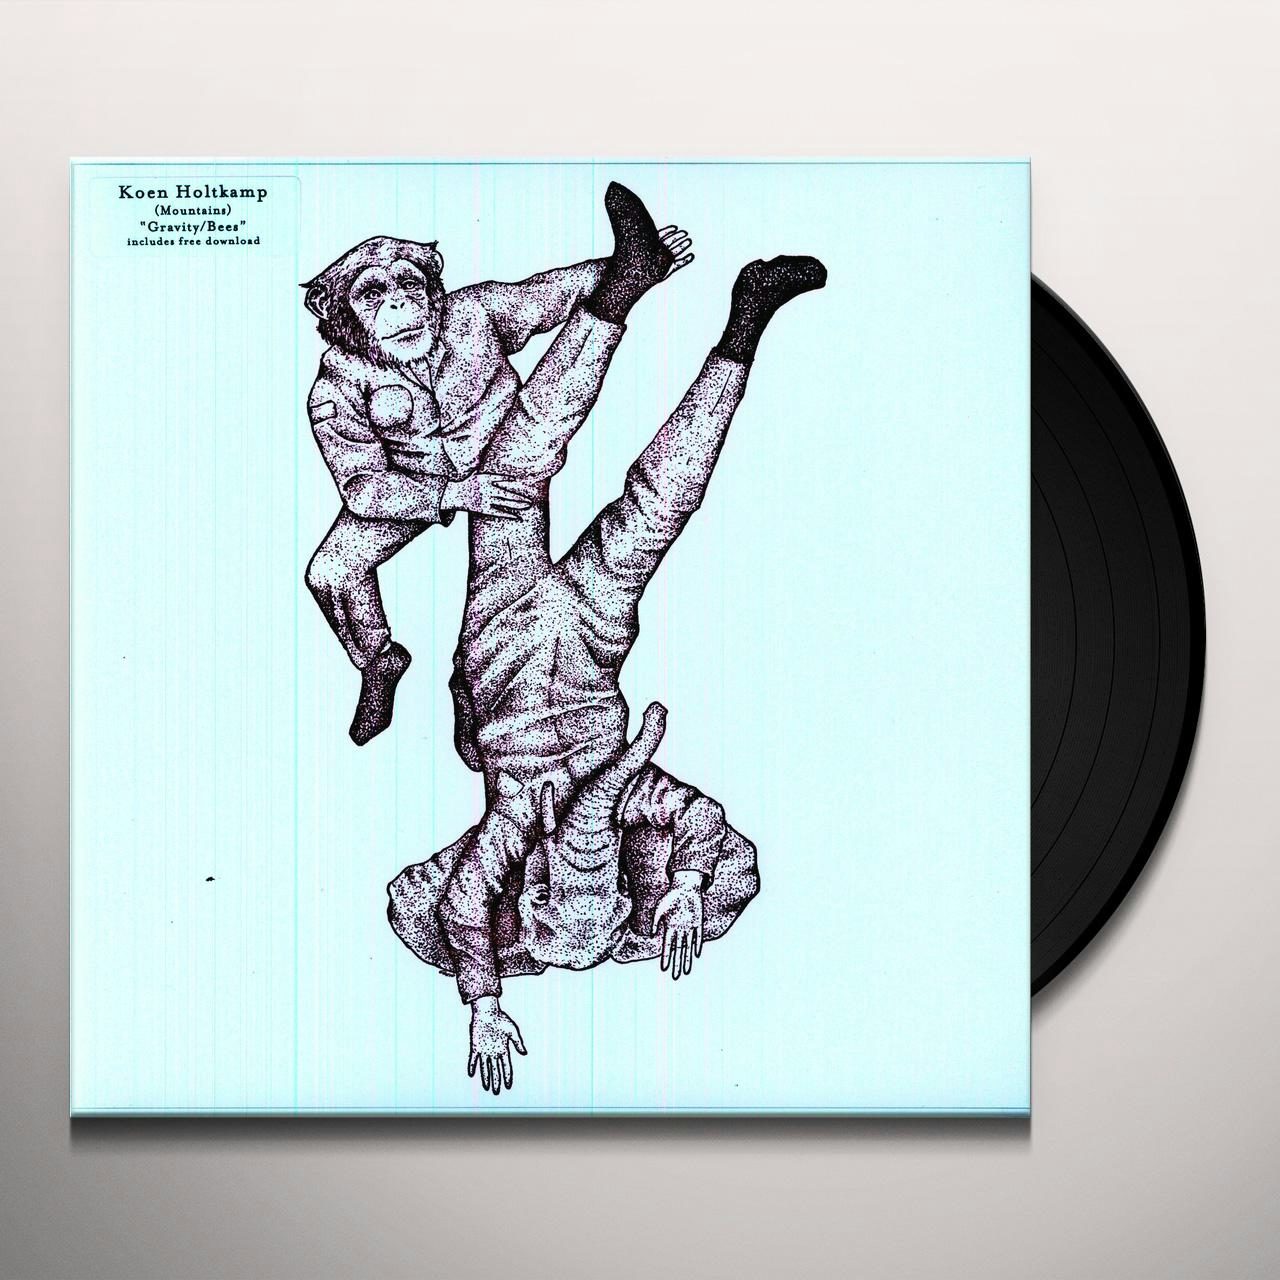 Koen Holtkamp GRAVITY BEES Vinyl Record